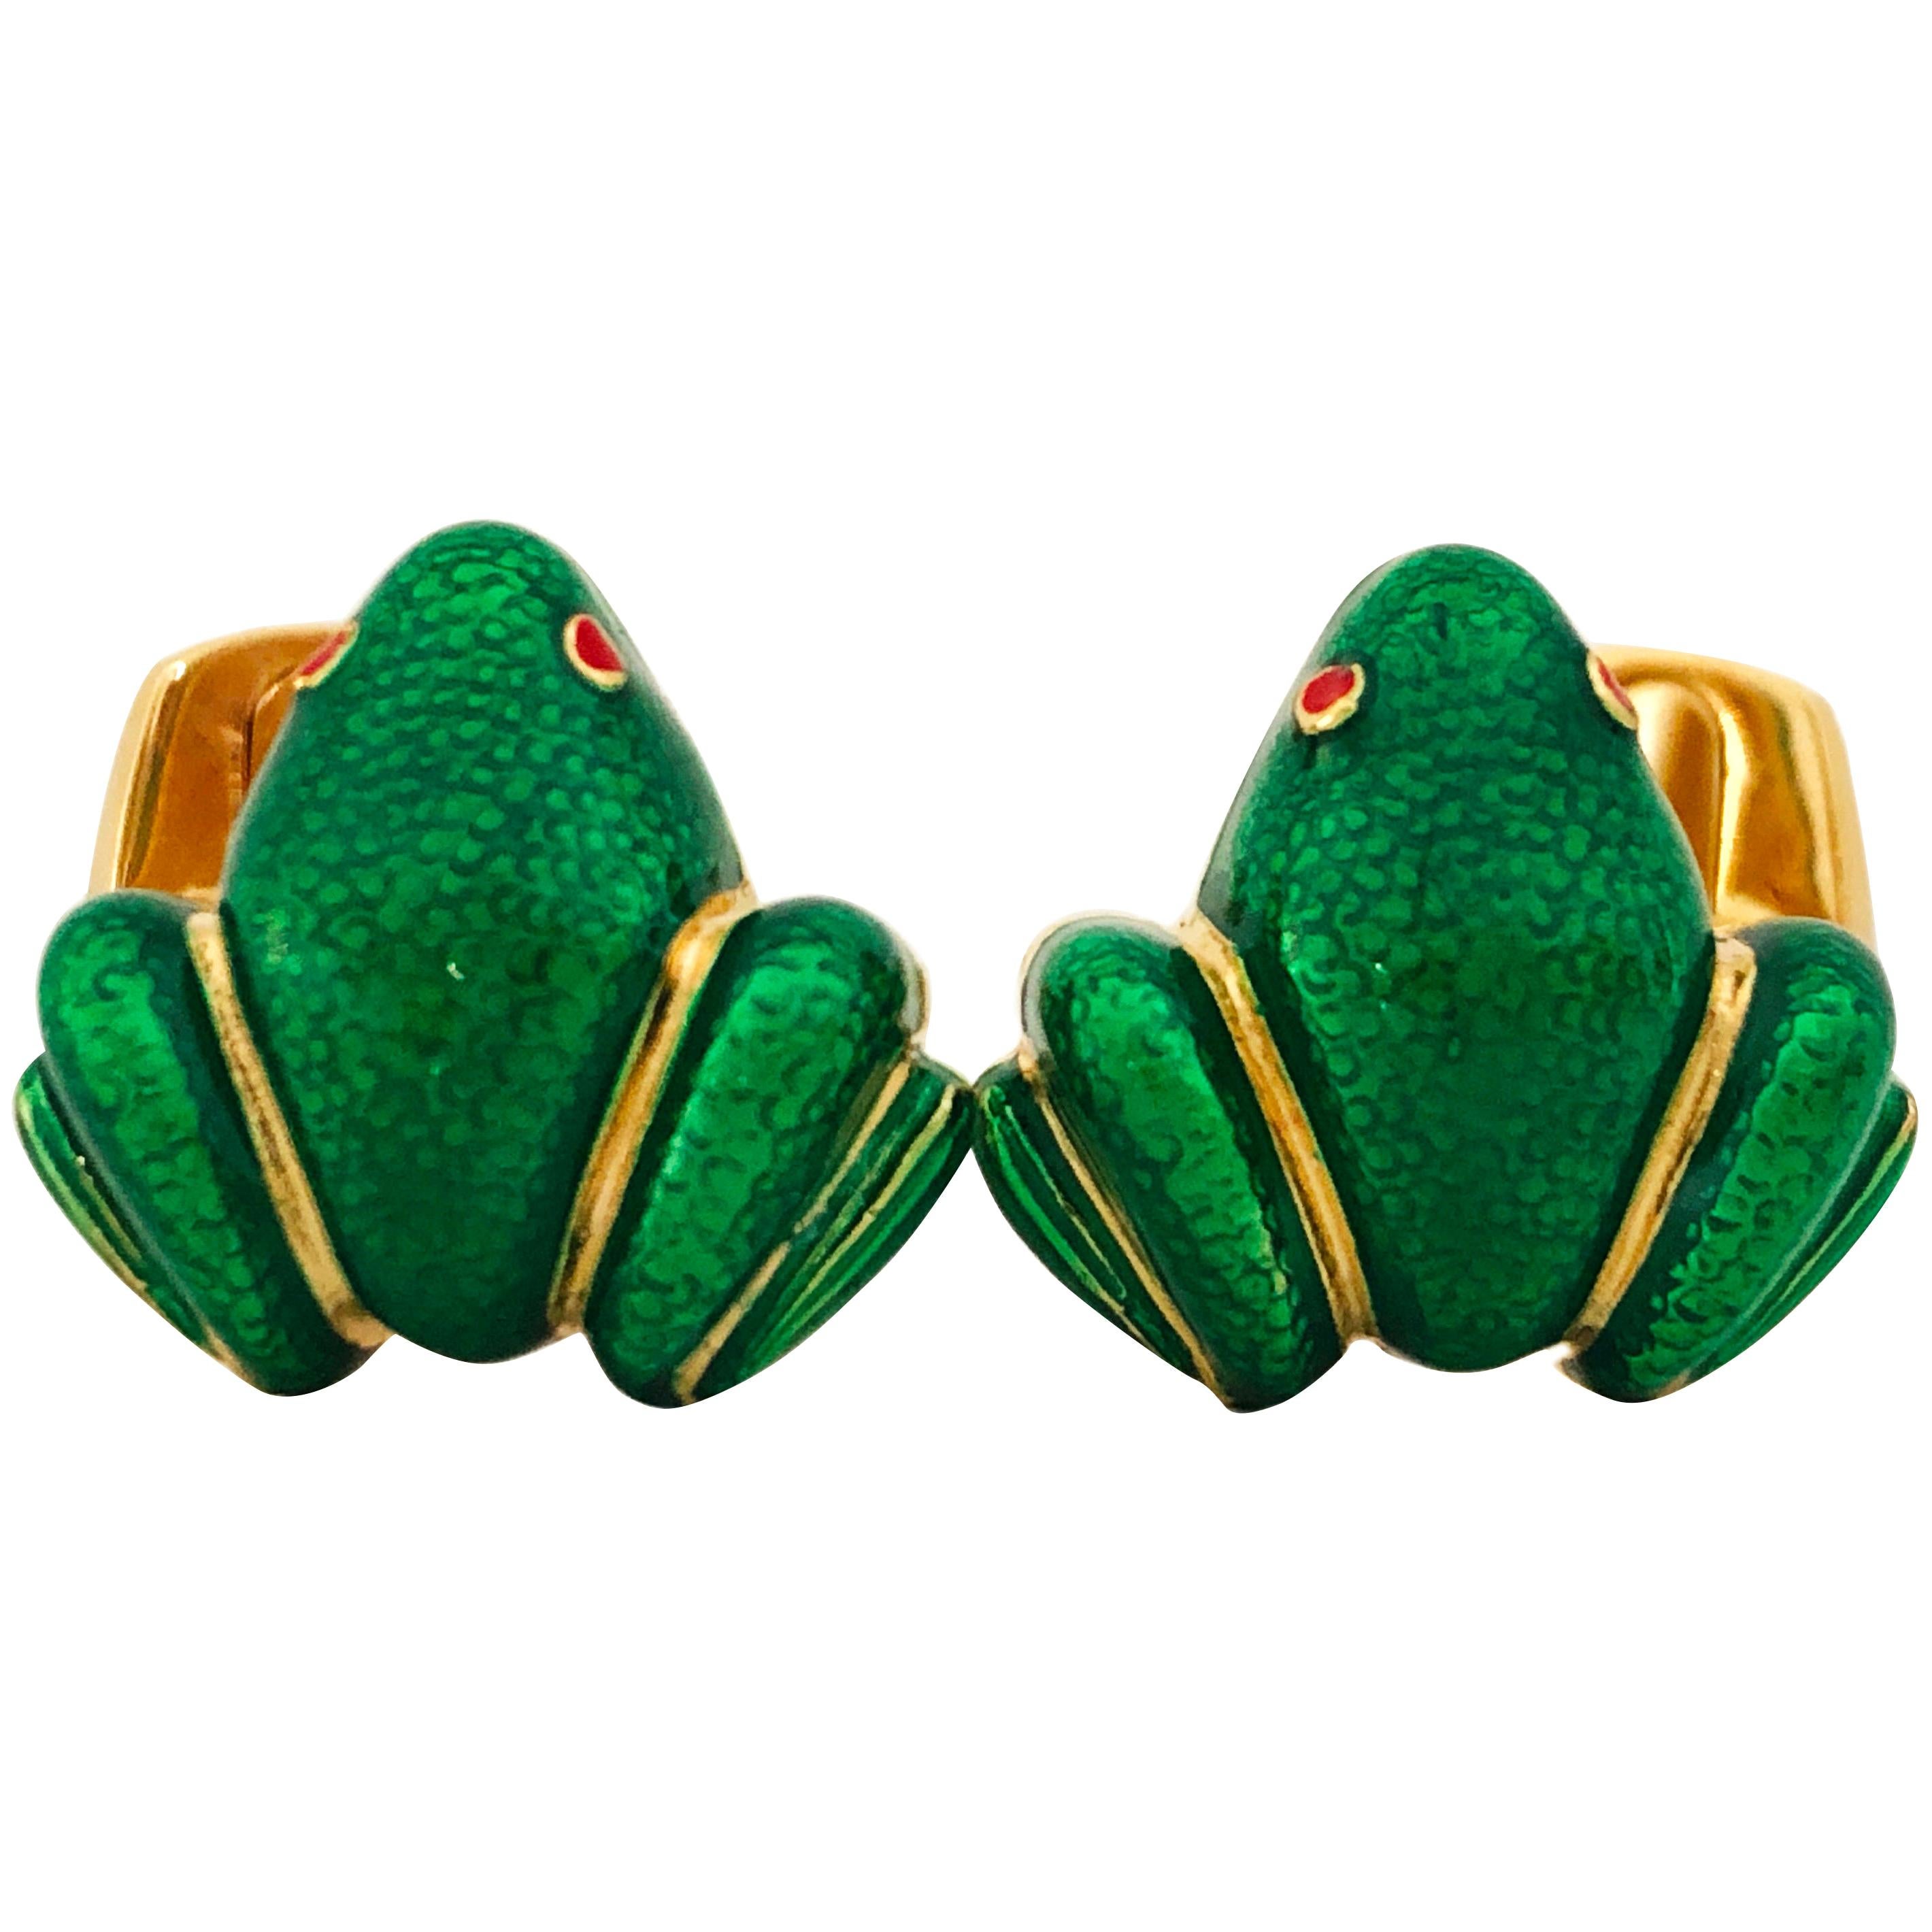 Berca Grüne hand emaillierte Froschförmige vergoldete Manschettenknöpfe aus Sterlingsilber in Froschform